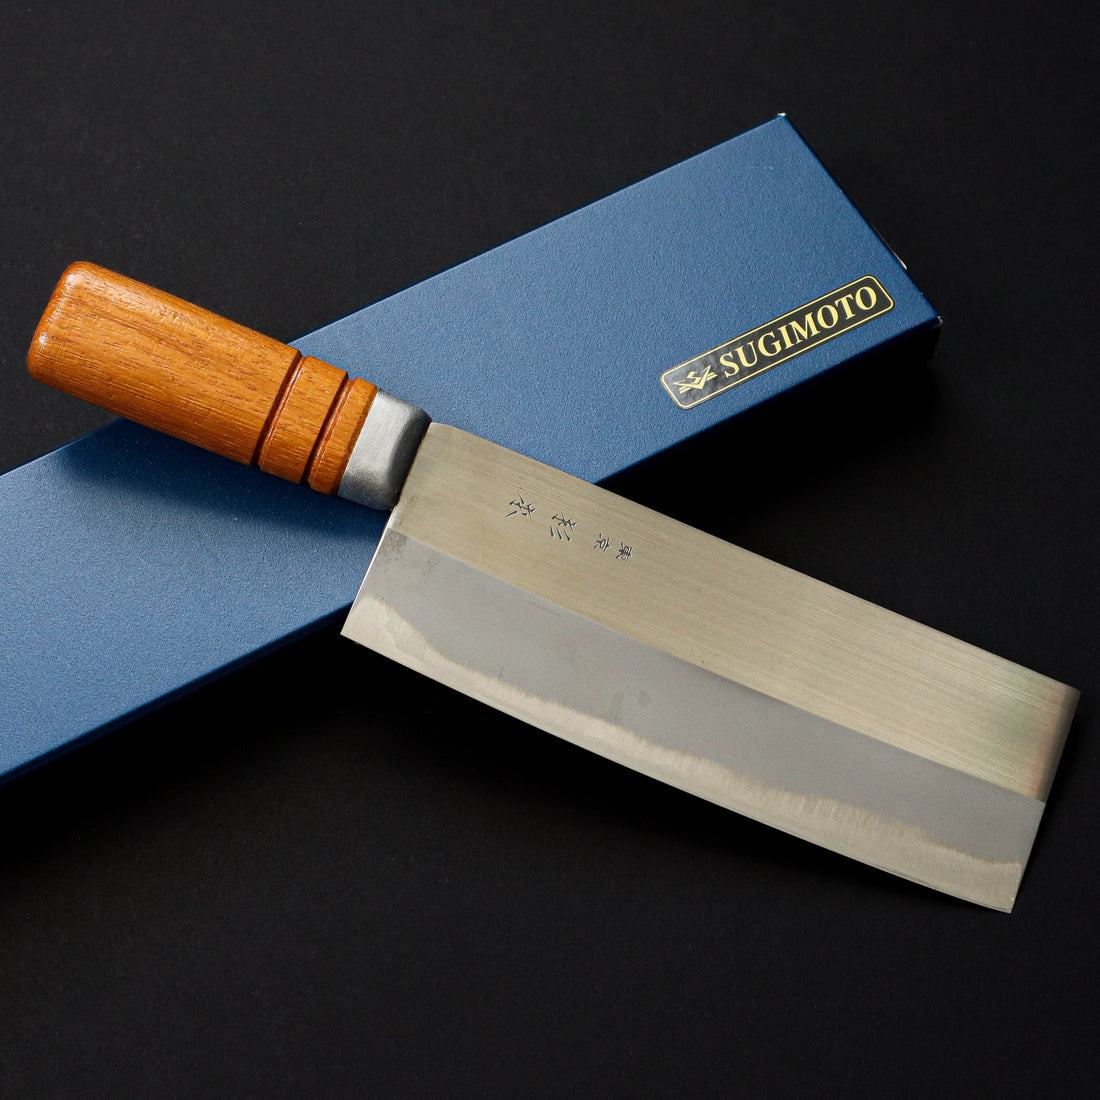 SUGIMOTO DUCK KNIFE CHROMIUM MOLYBDENUM 190MM NATURAL WOOD HANDLE